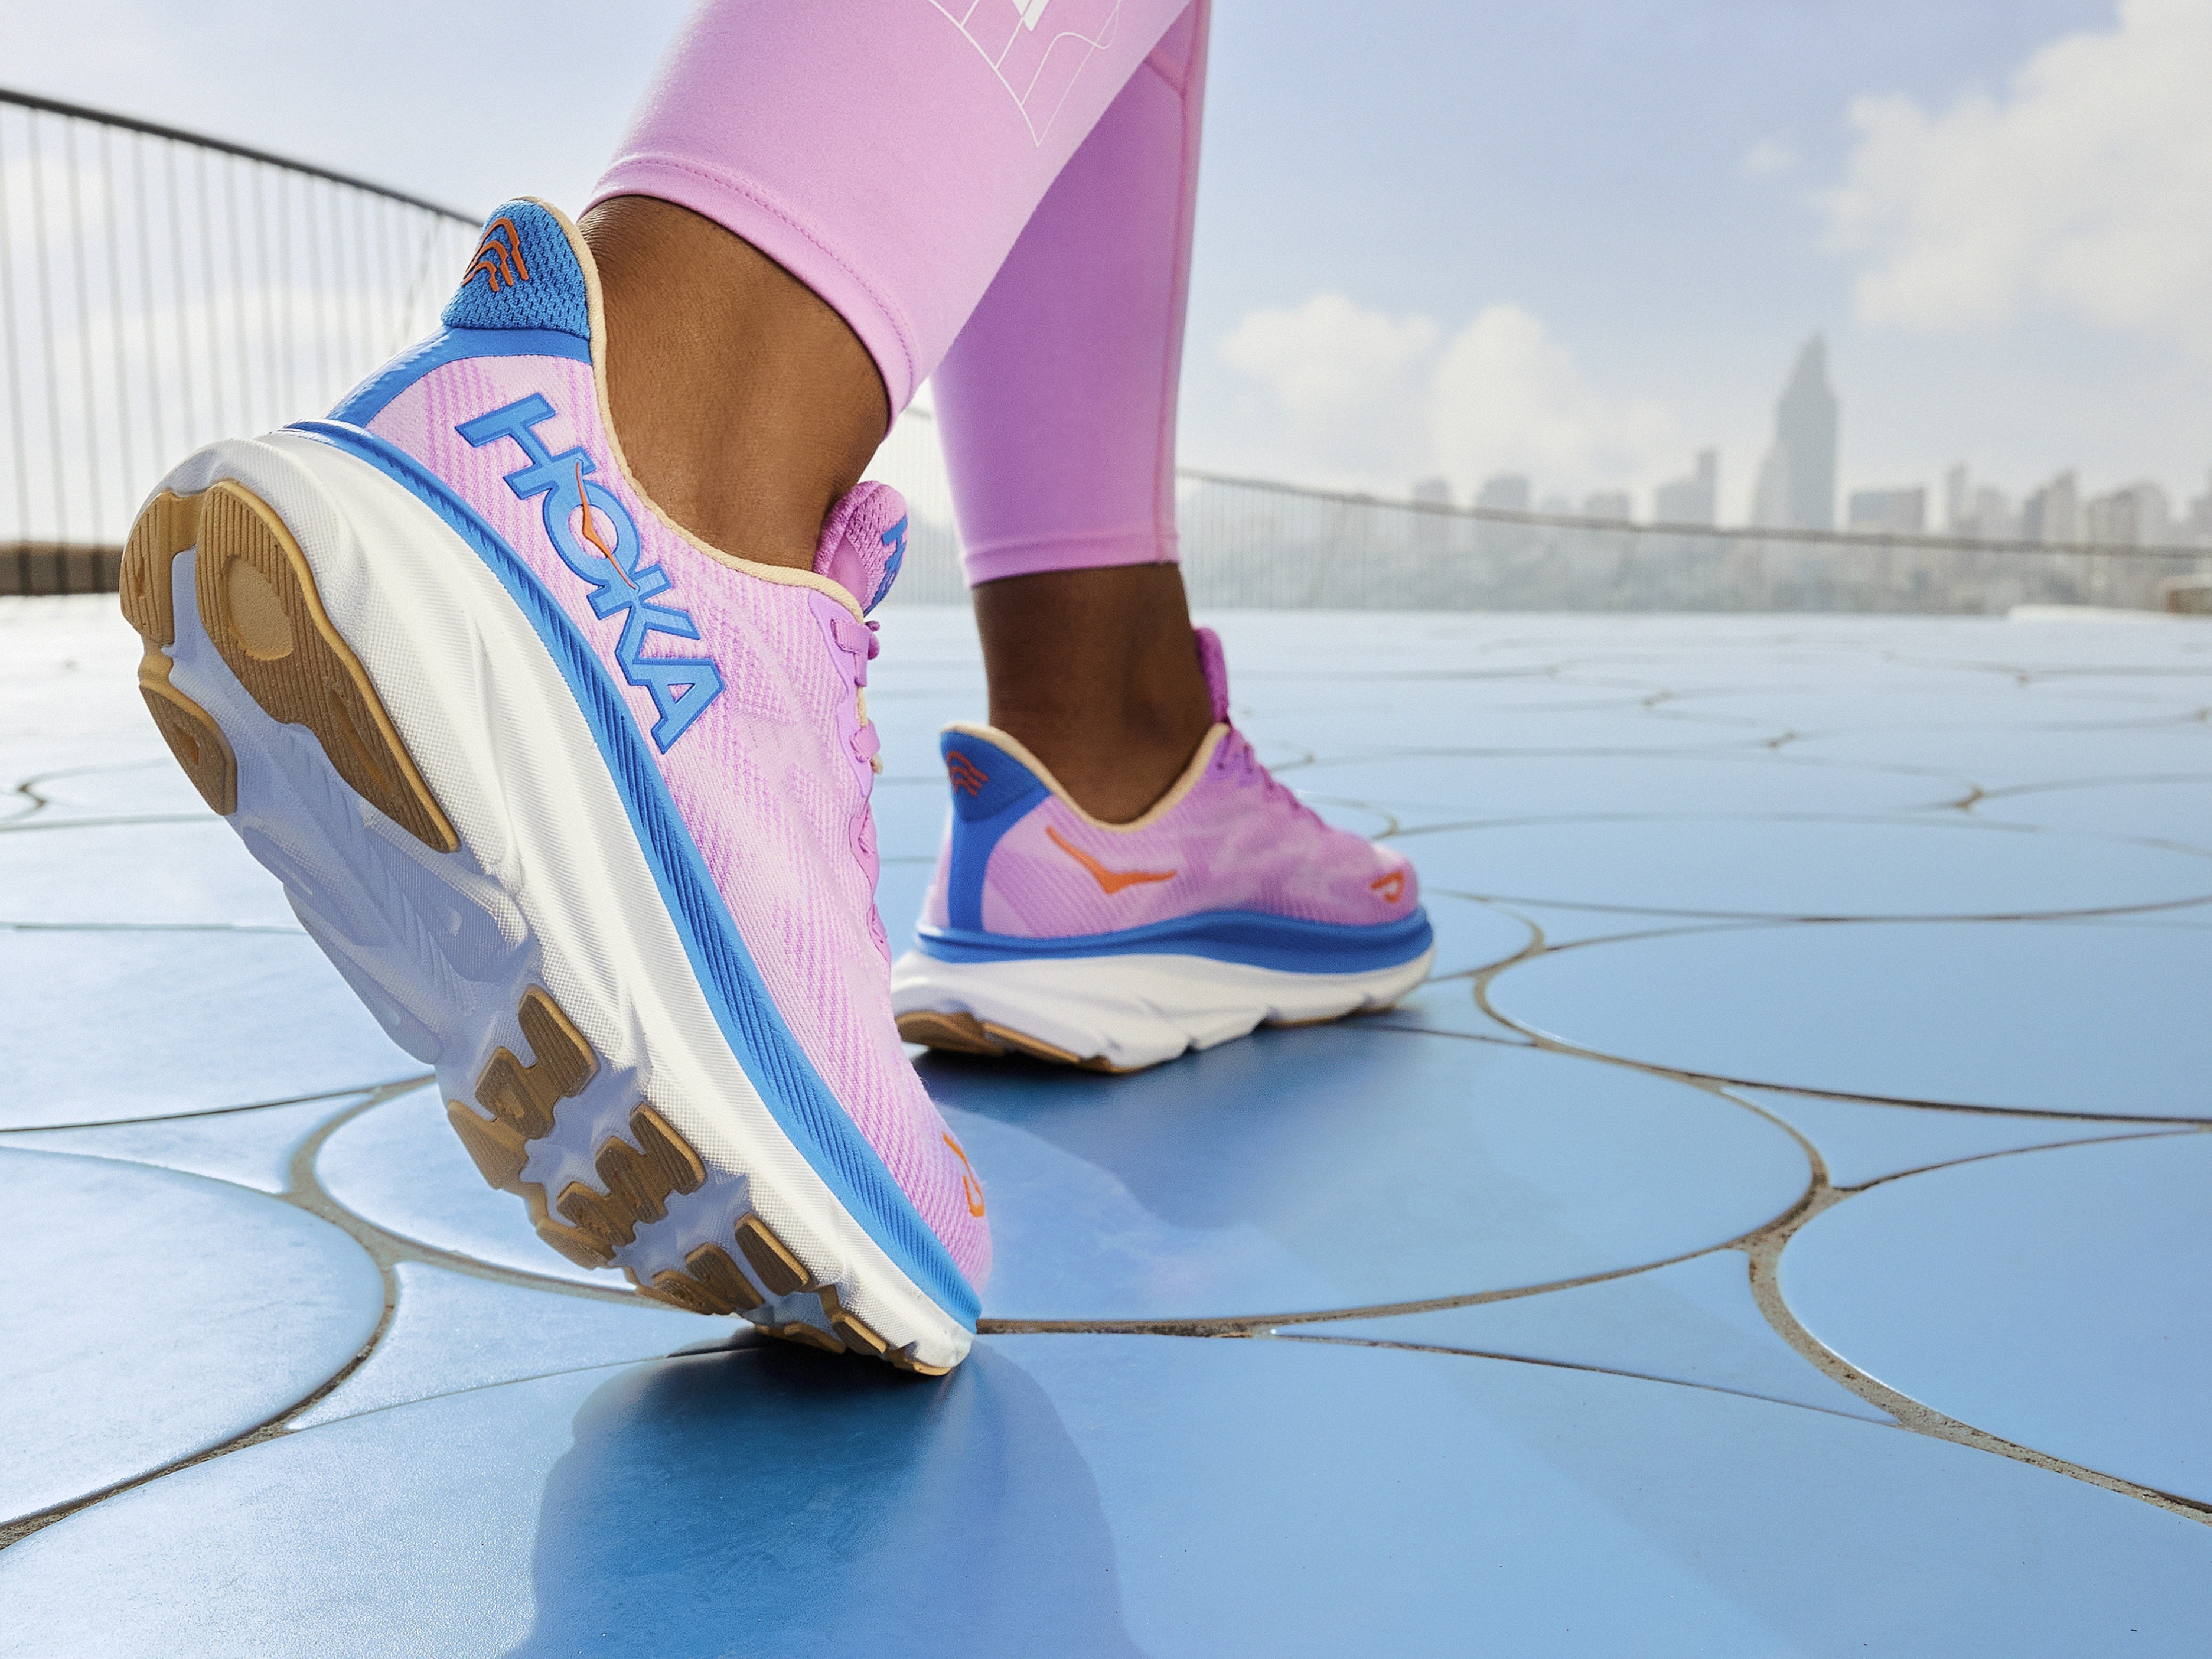 Treble Overeenkomend excuus Women's Hoka One One Running Shoes in NYC